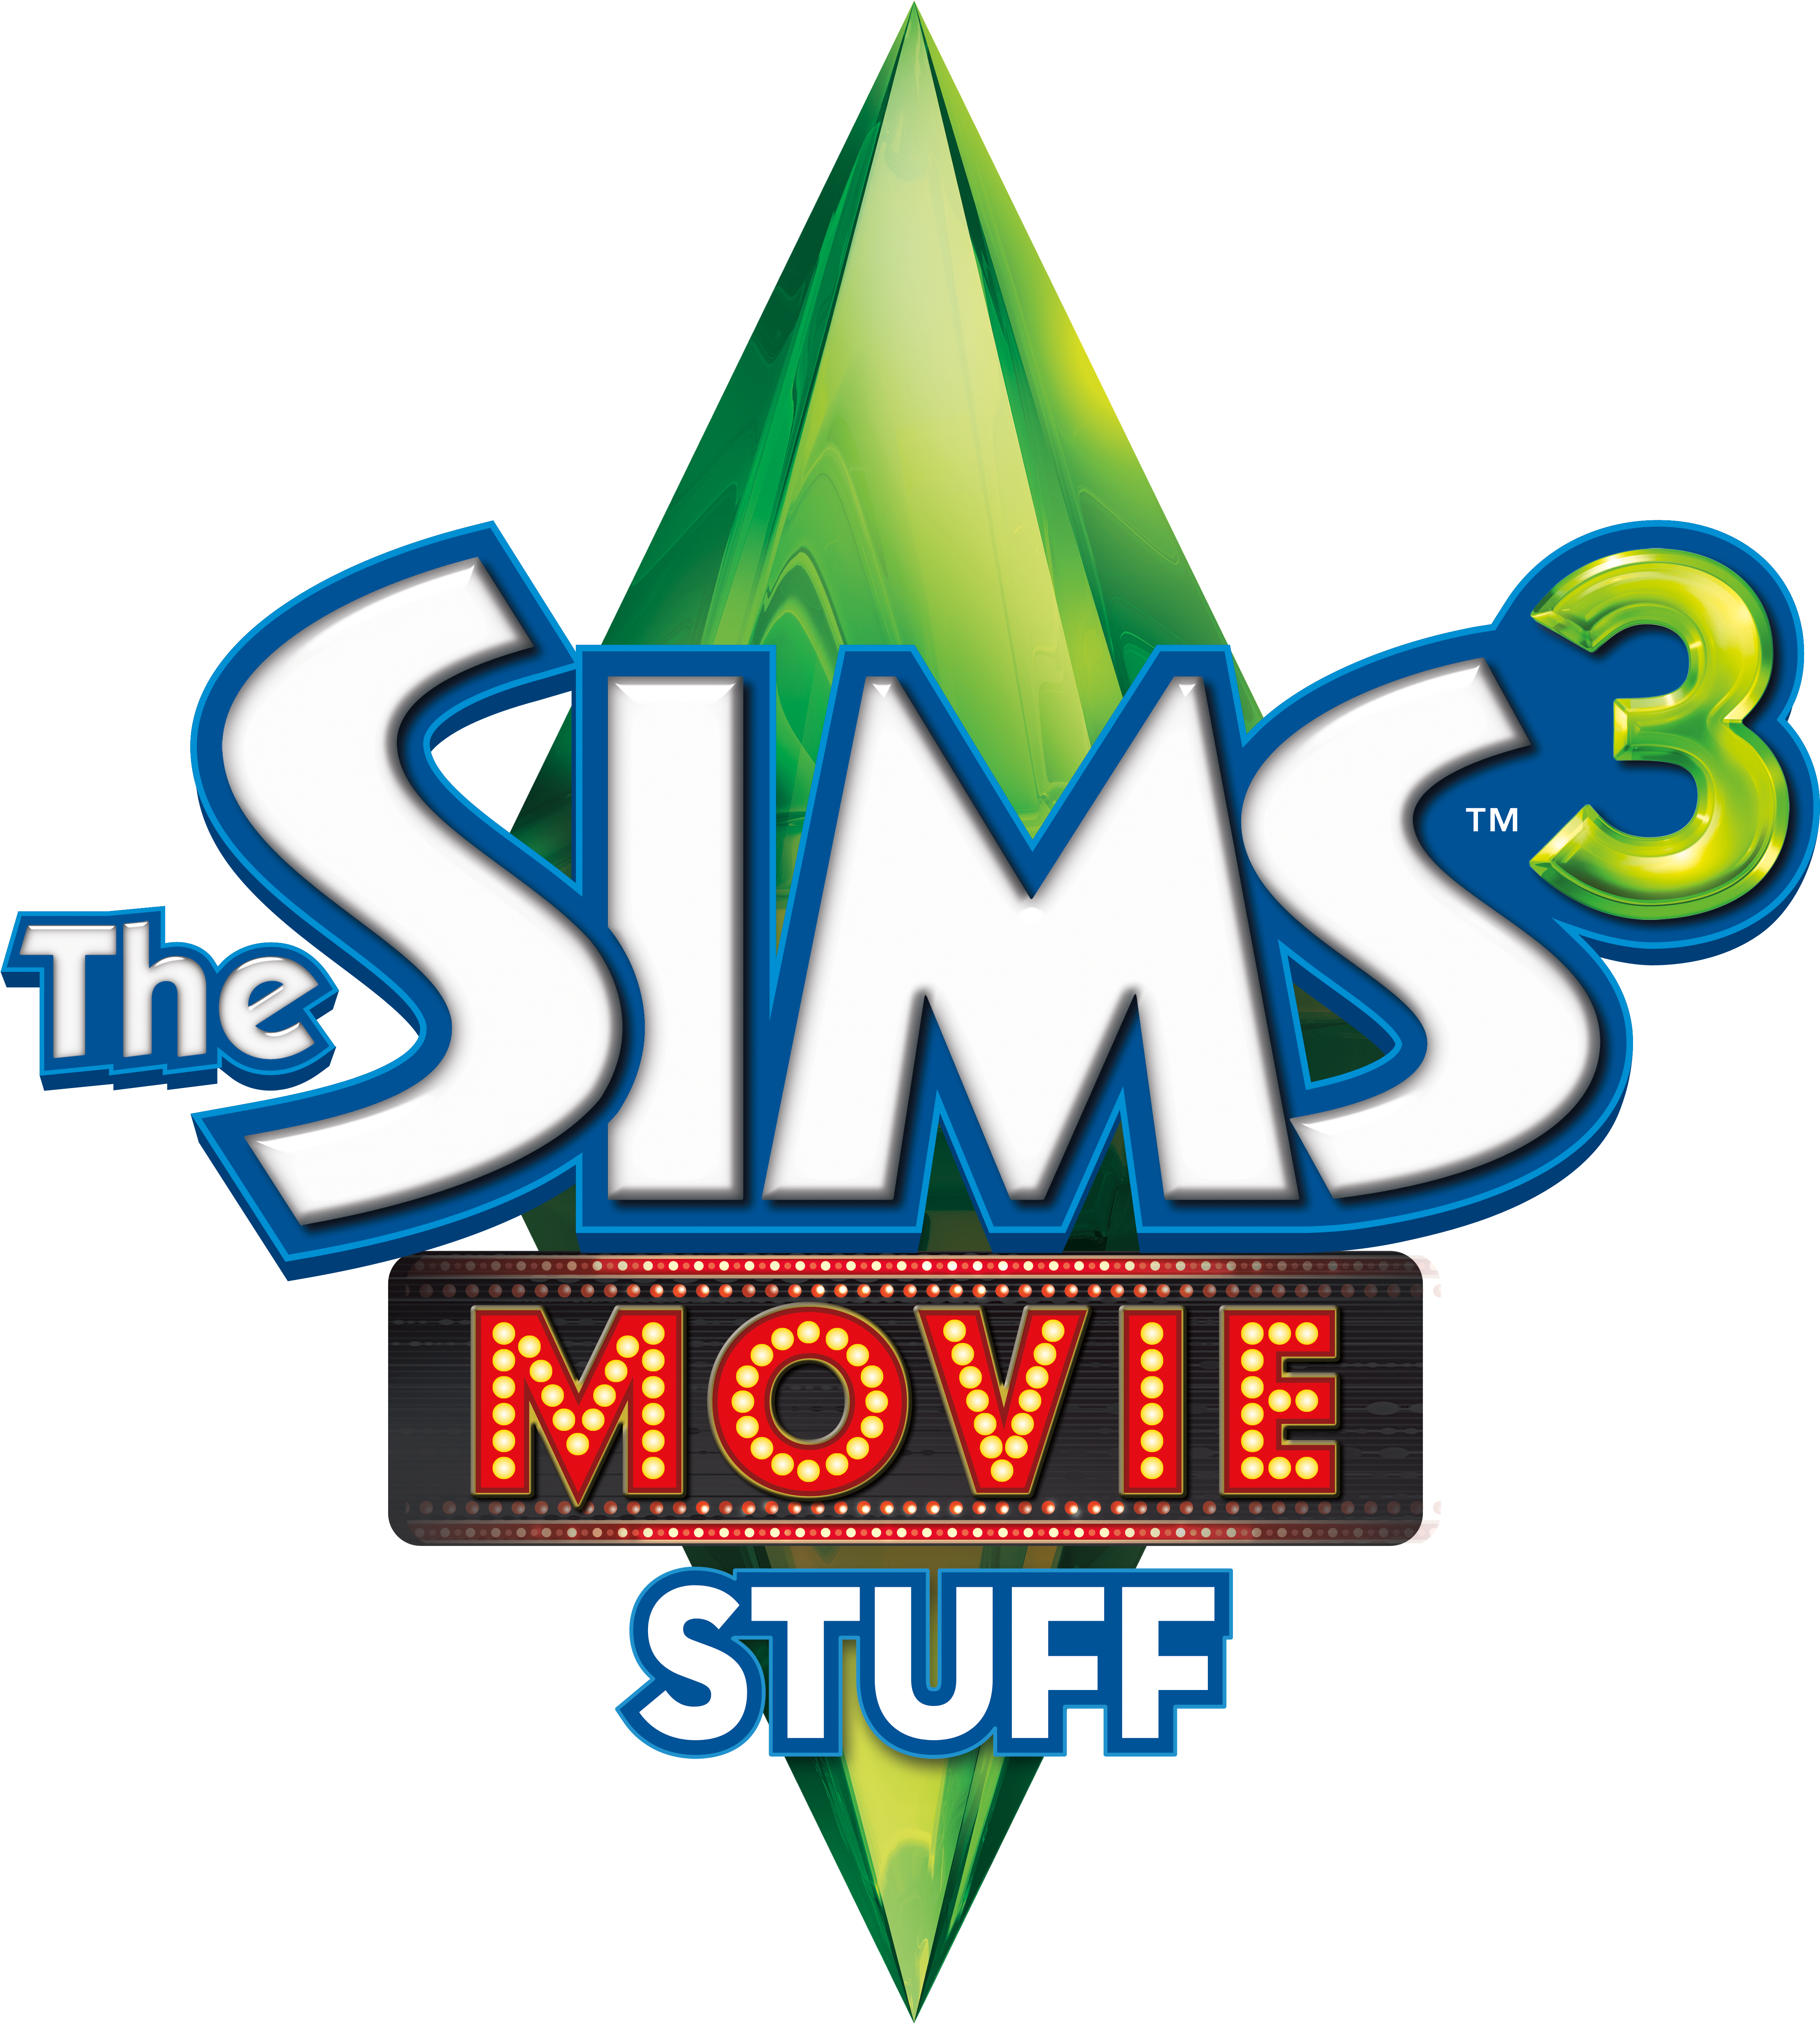 A Video Game Logo With A Green Diamond